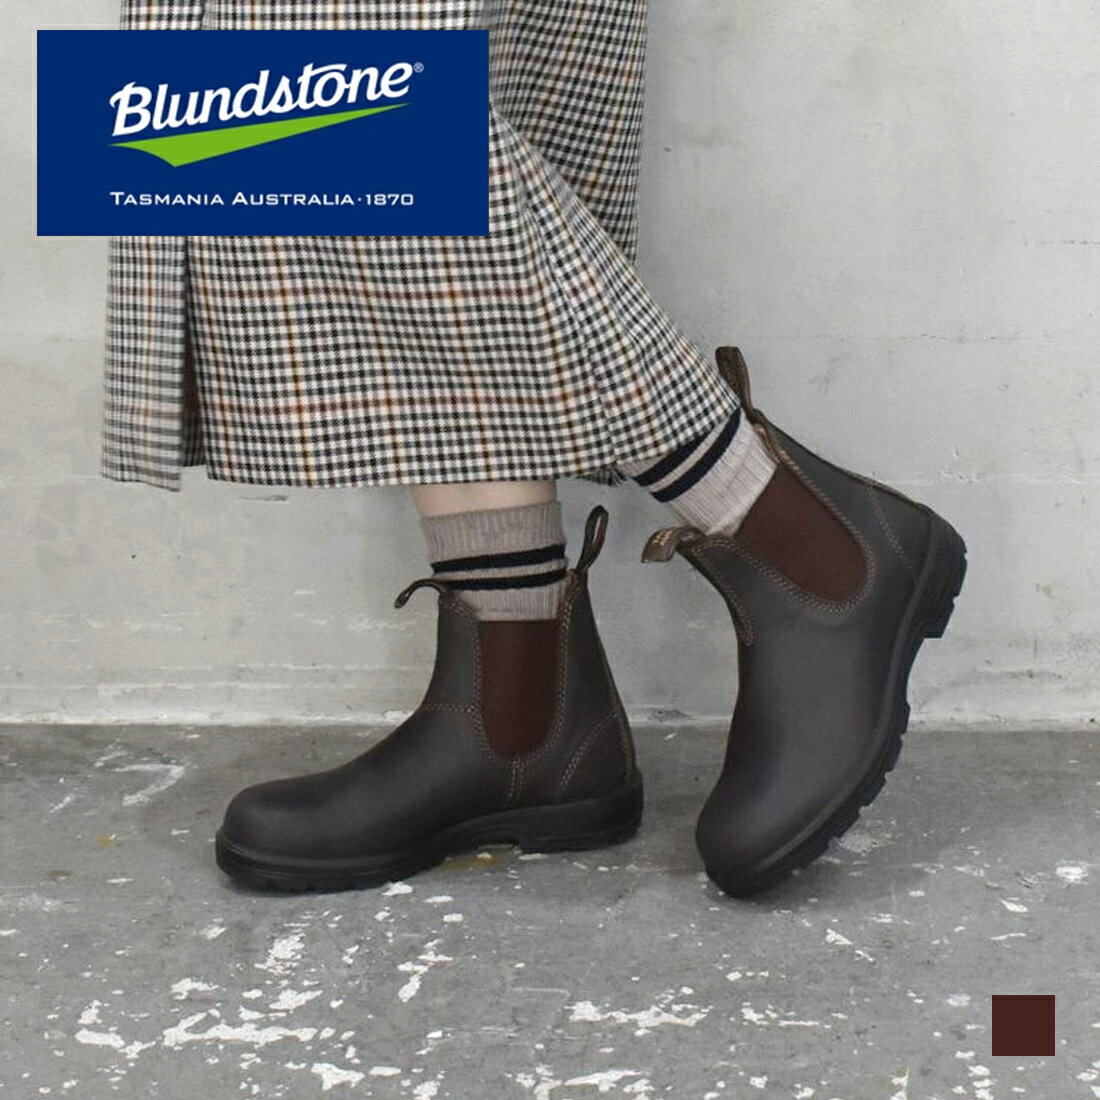 Blundstone ブランドストーン レディス レインブーツ ショートブーツ 晴雨兼用 ブラウン 防水 耐久性 全天候対応 銀座ワシントン WASH ウォッシュ